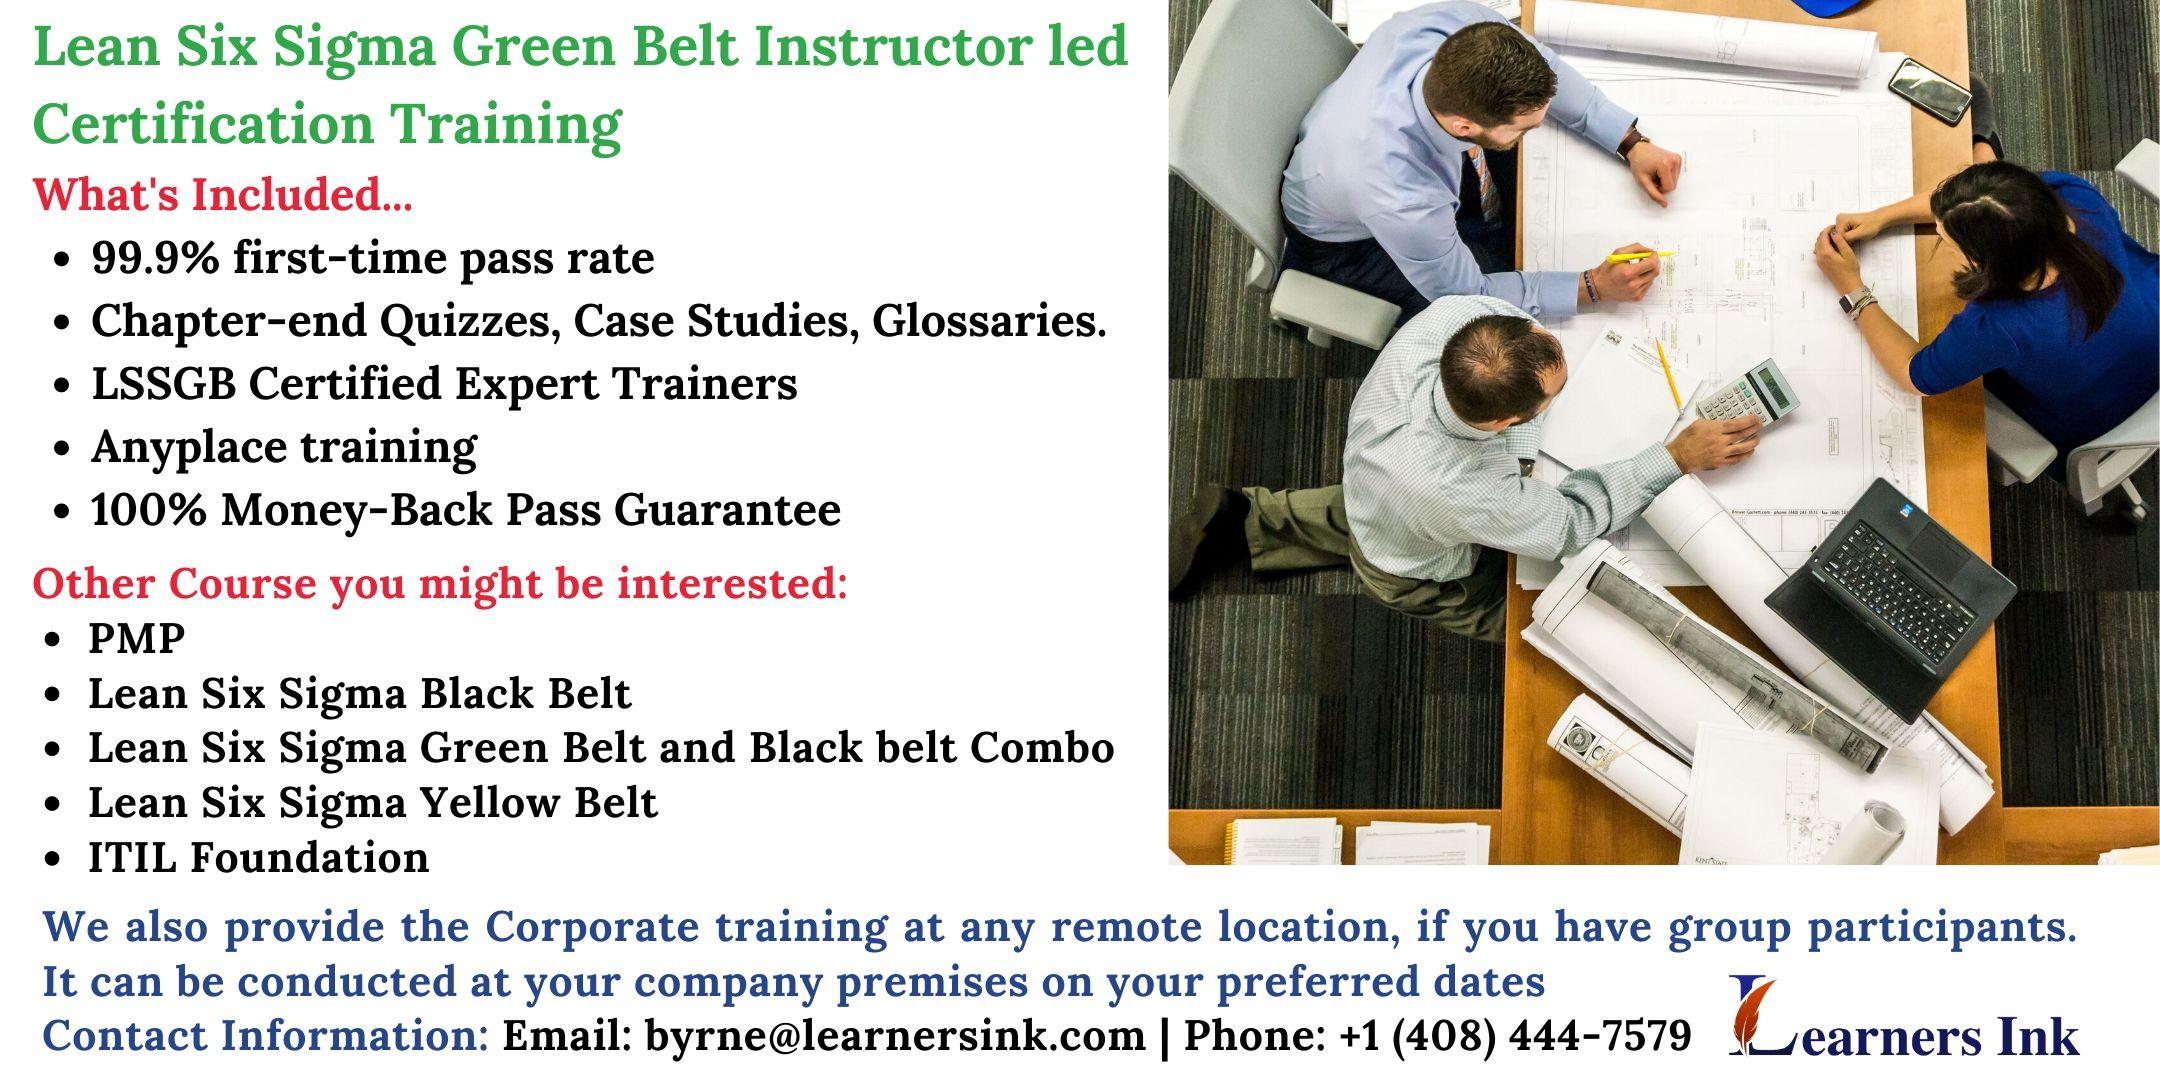 Lean Six Sigma Green Belt Certification Training Course (LSSGB) in Scottsdale